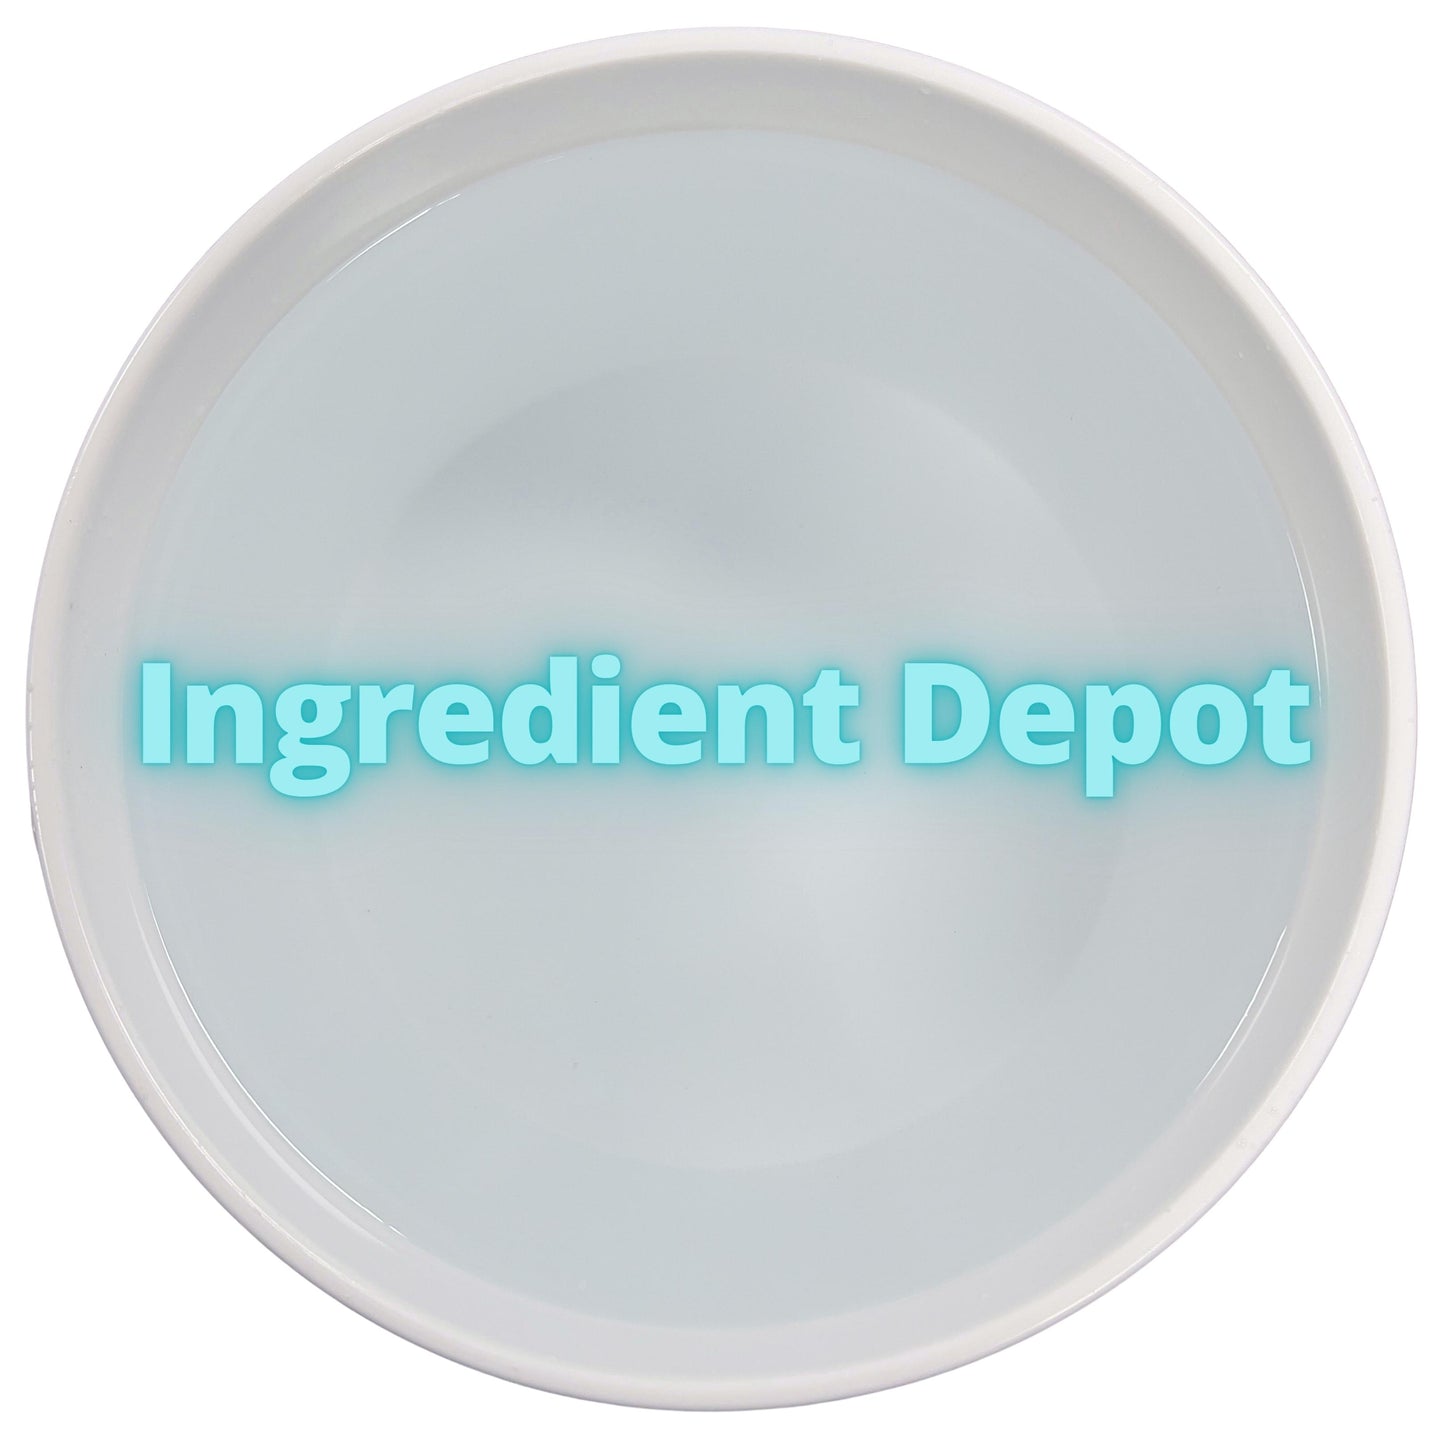 Propylene Glycol 99.9% Technical Grade 2.5 litres - IngredientDepot.com